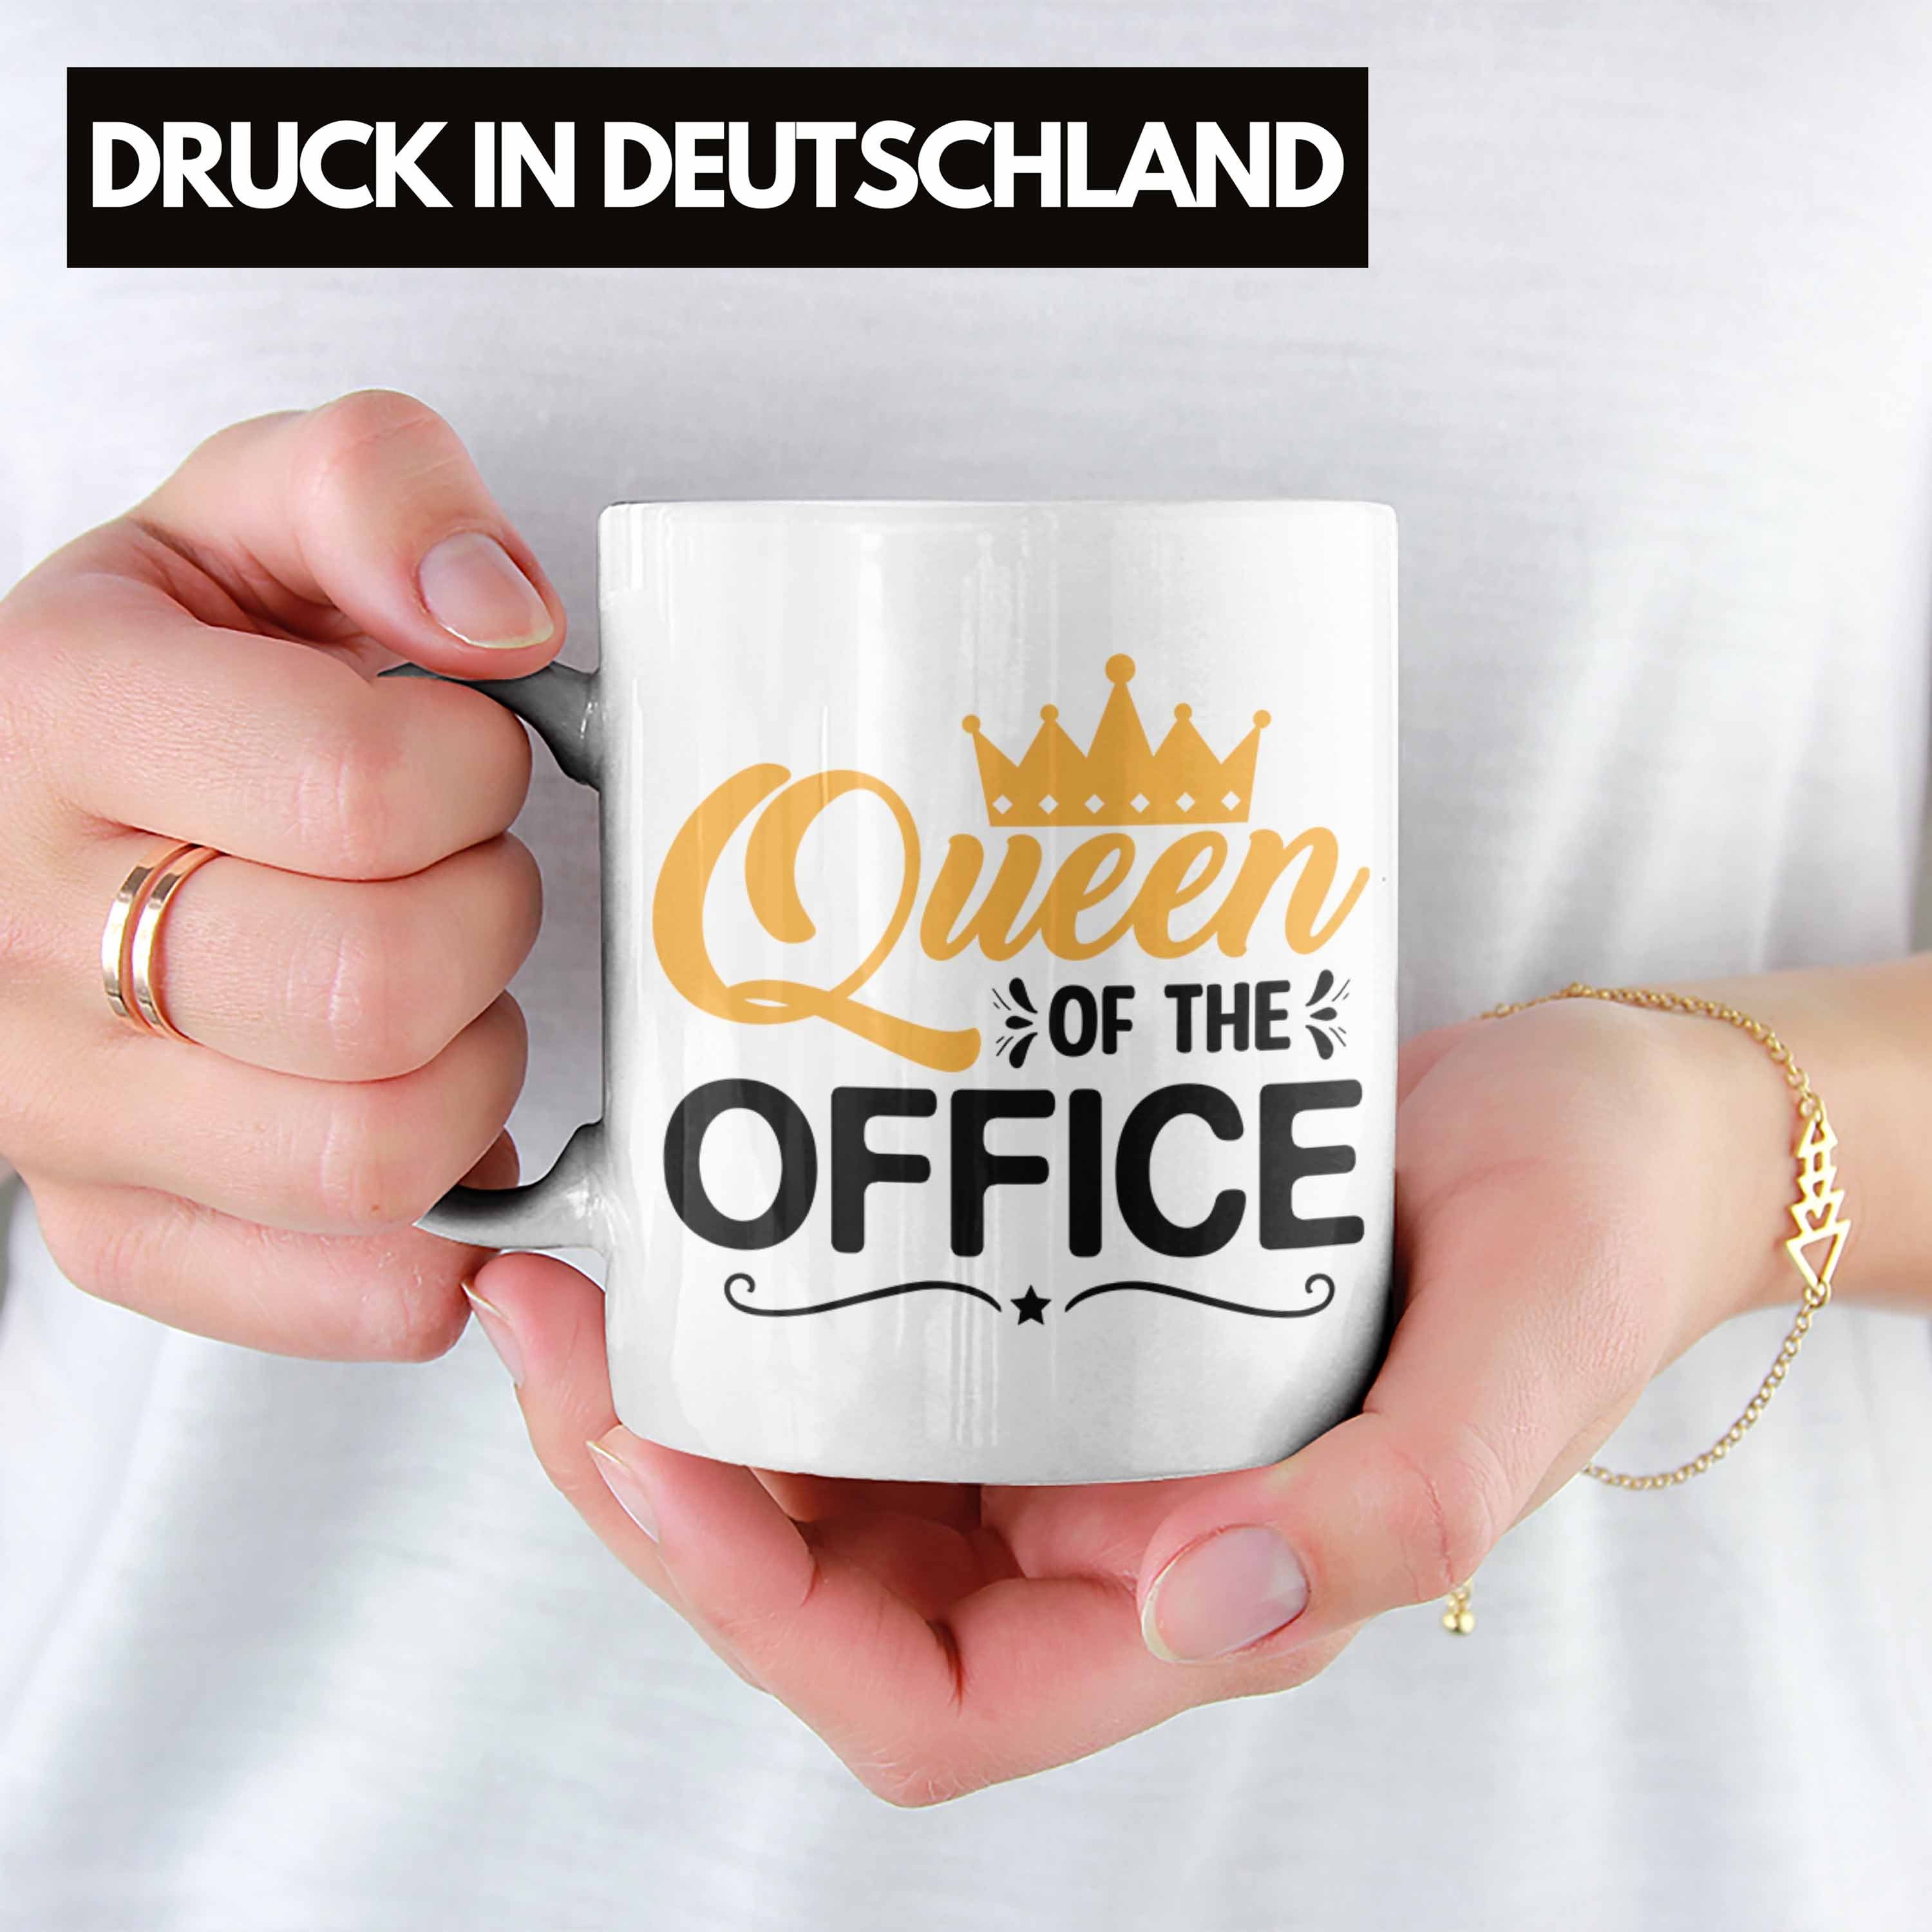 Office Chefin Weiss Kollegin Trendation Of Geschenkidee Trendation Geschenk The Queen - Tasse Tasse